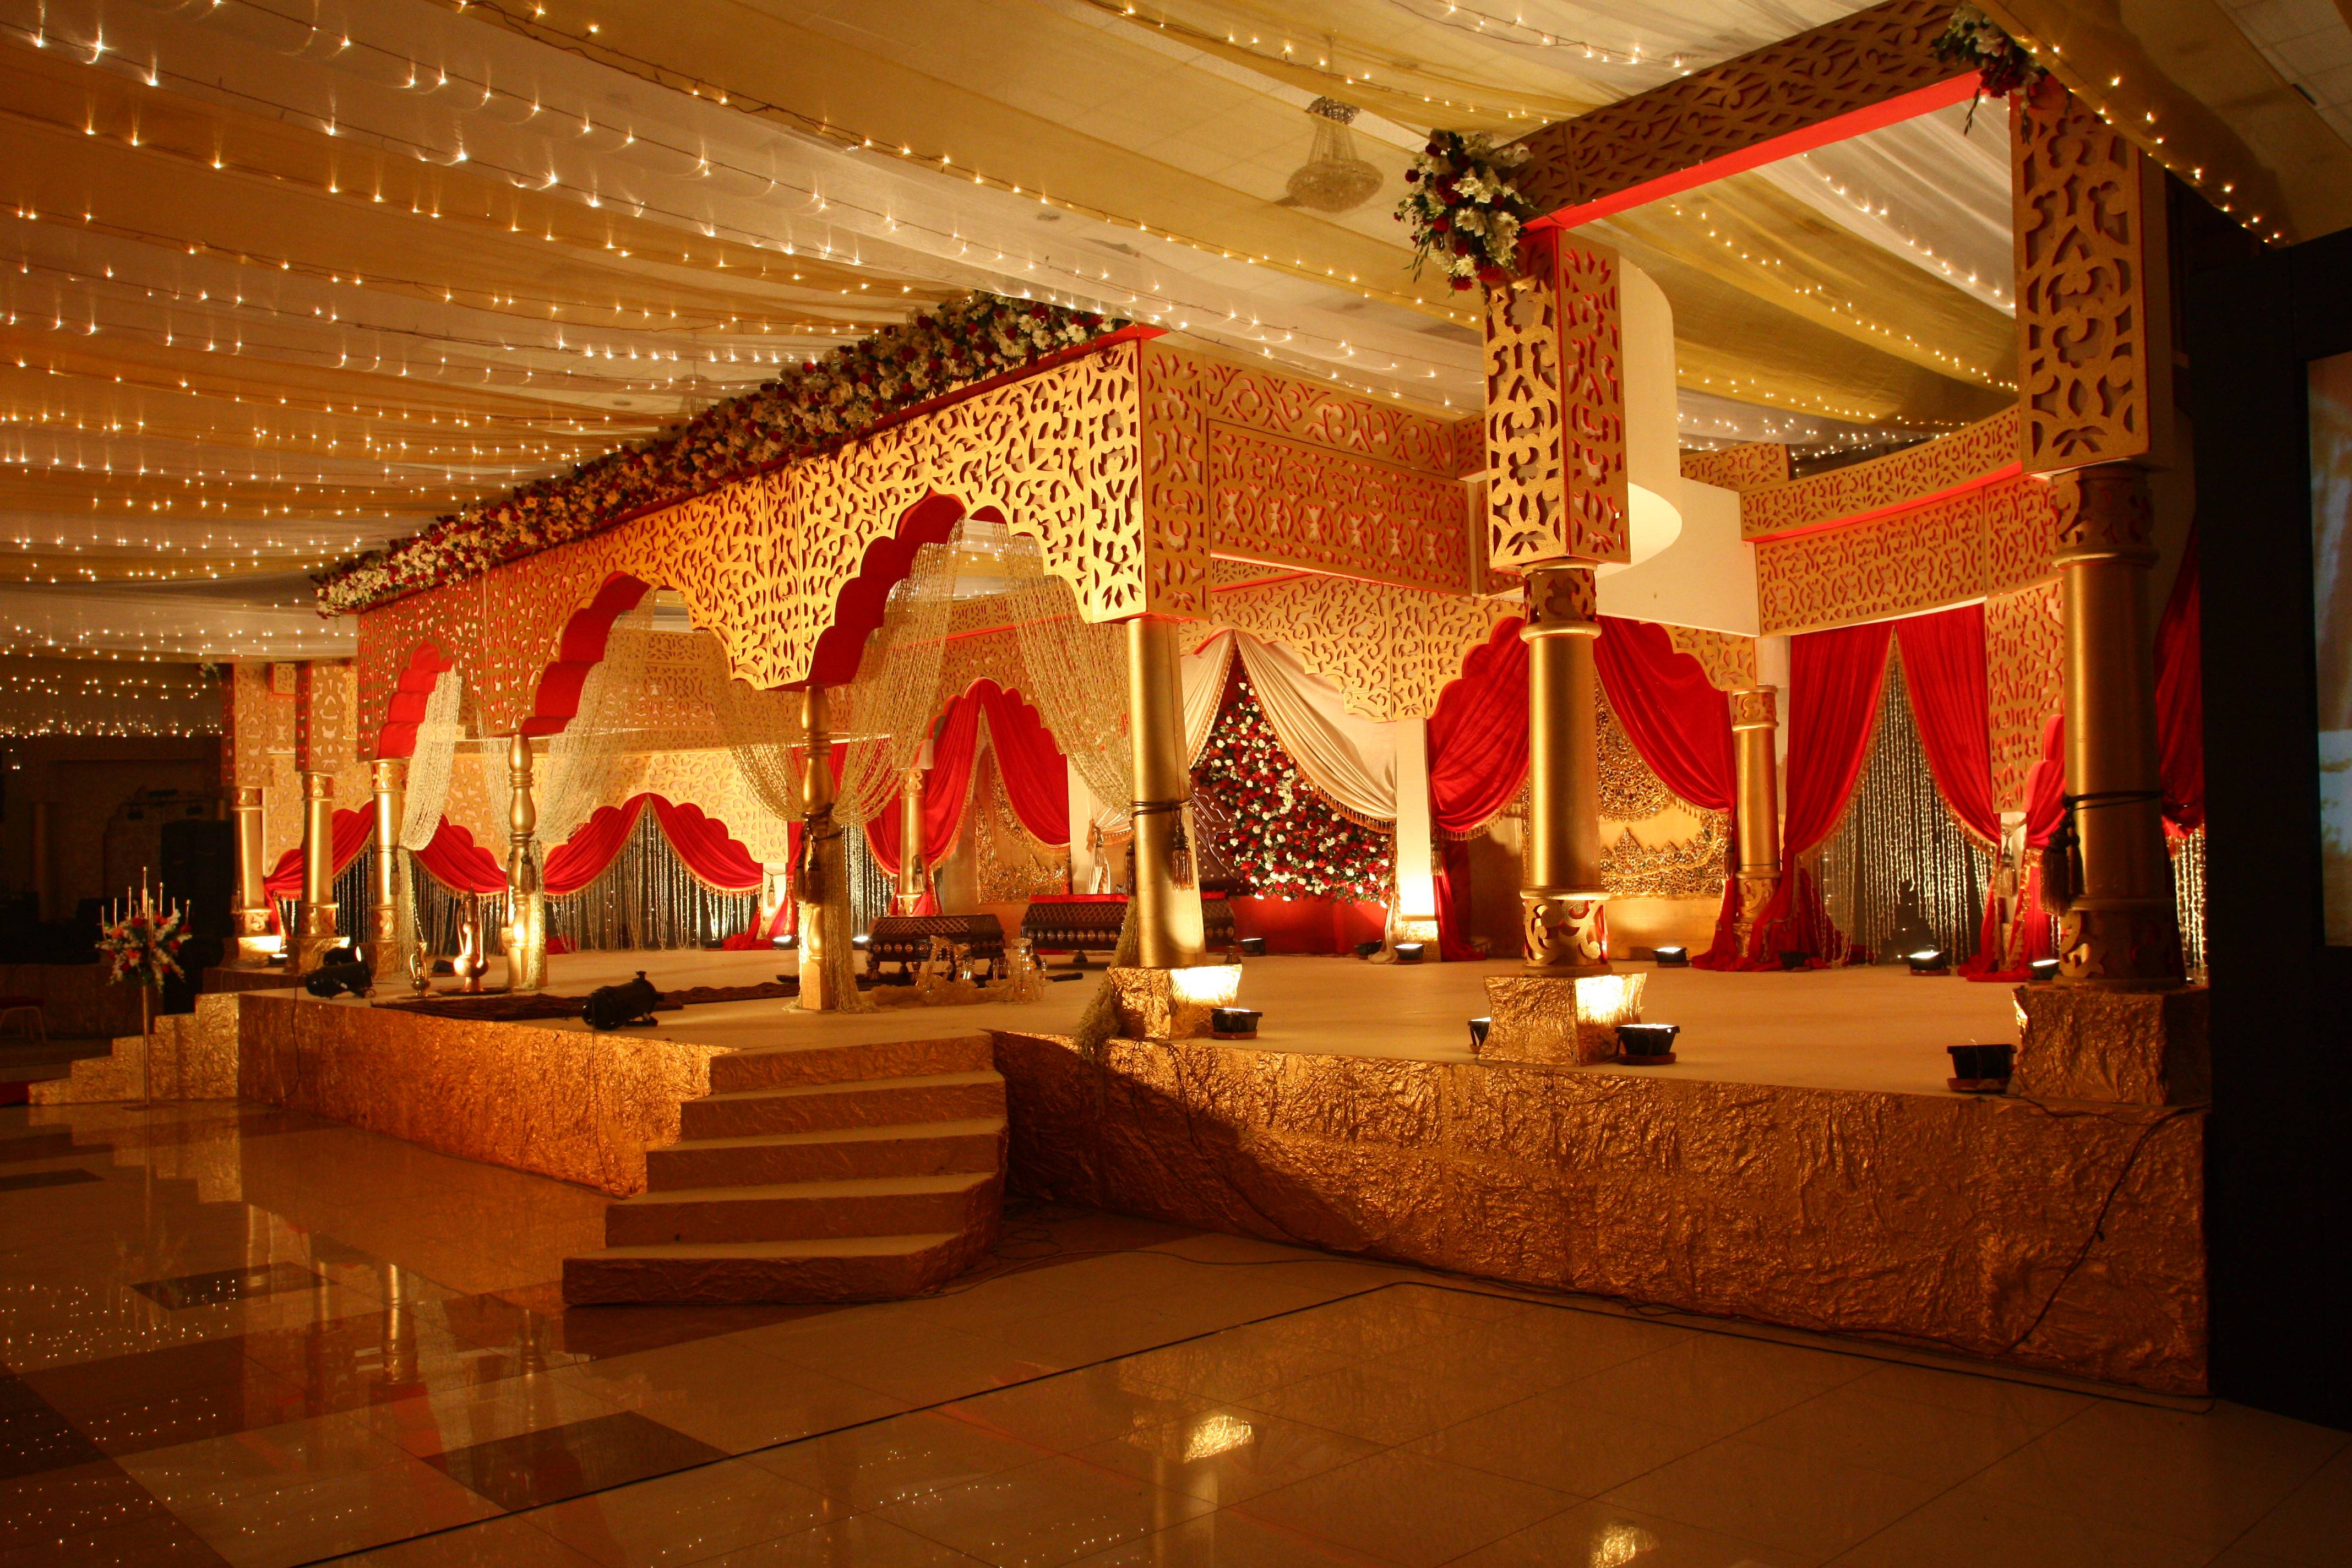 Indian Wedding Decoration Images - Free Download on Freepik